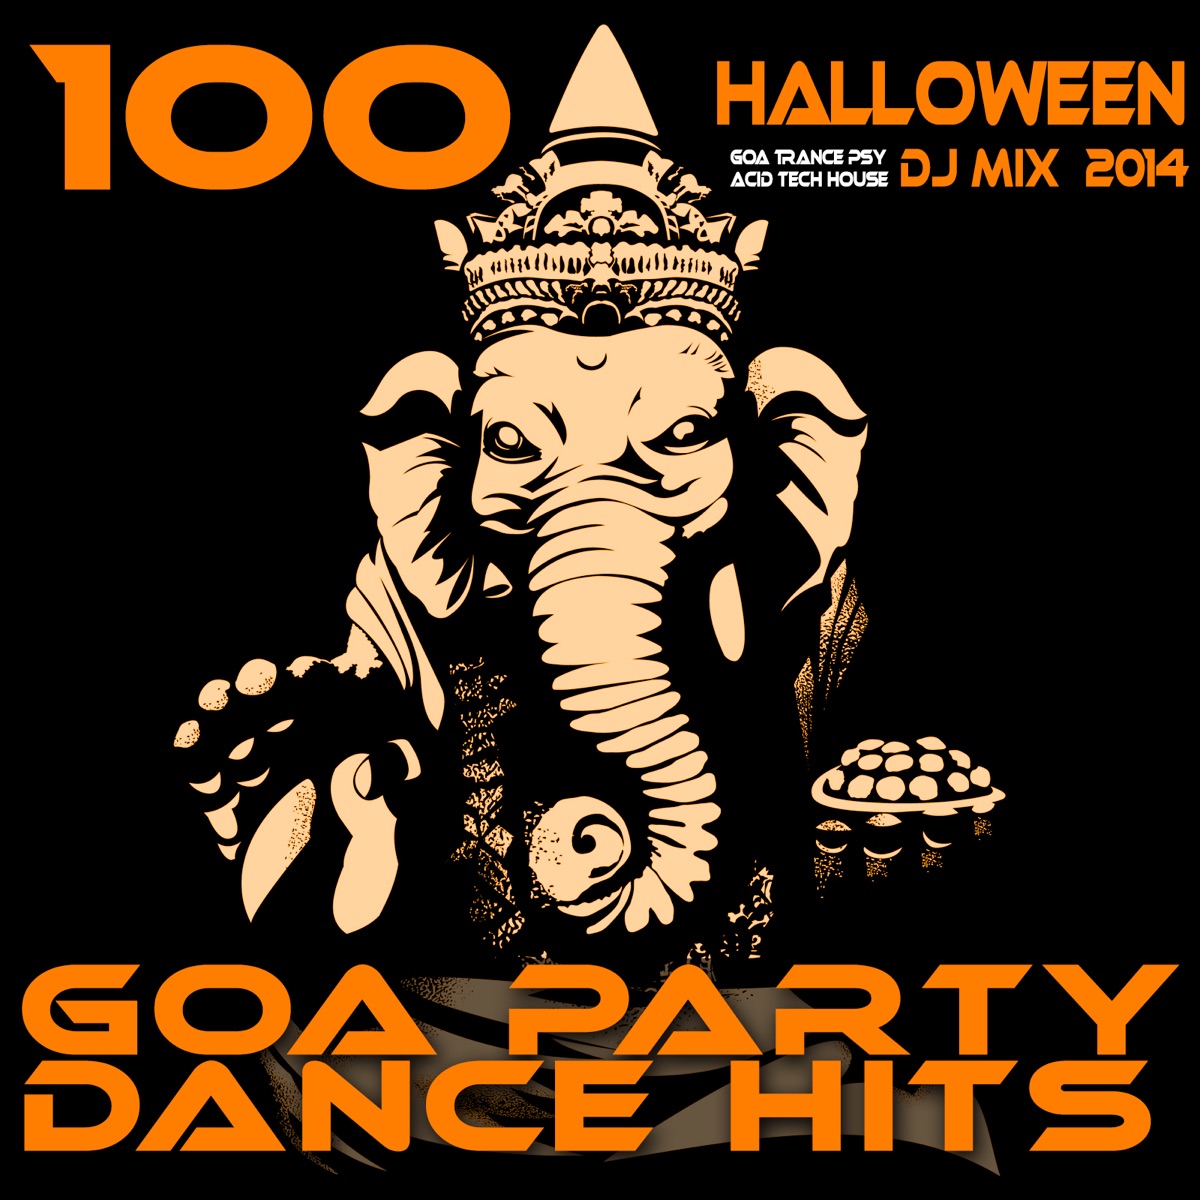 100 Halloween Hits Goa Trance Psy Acid Tech House DJ Mix 2014 - Goa Dance by Various Artists on Apple Music